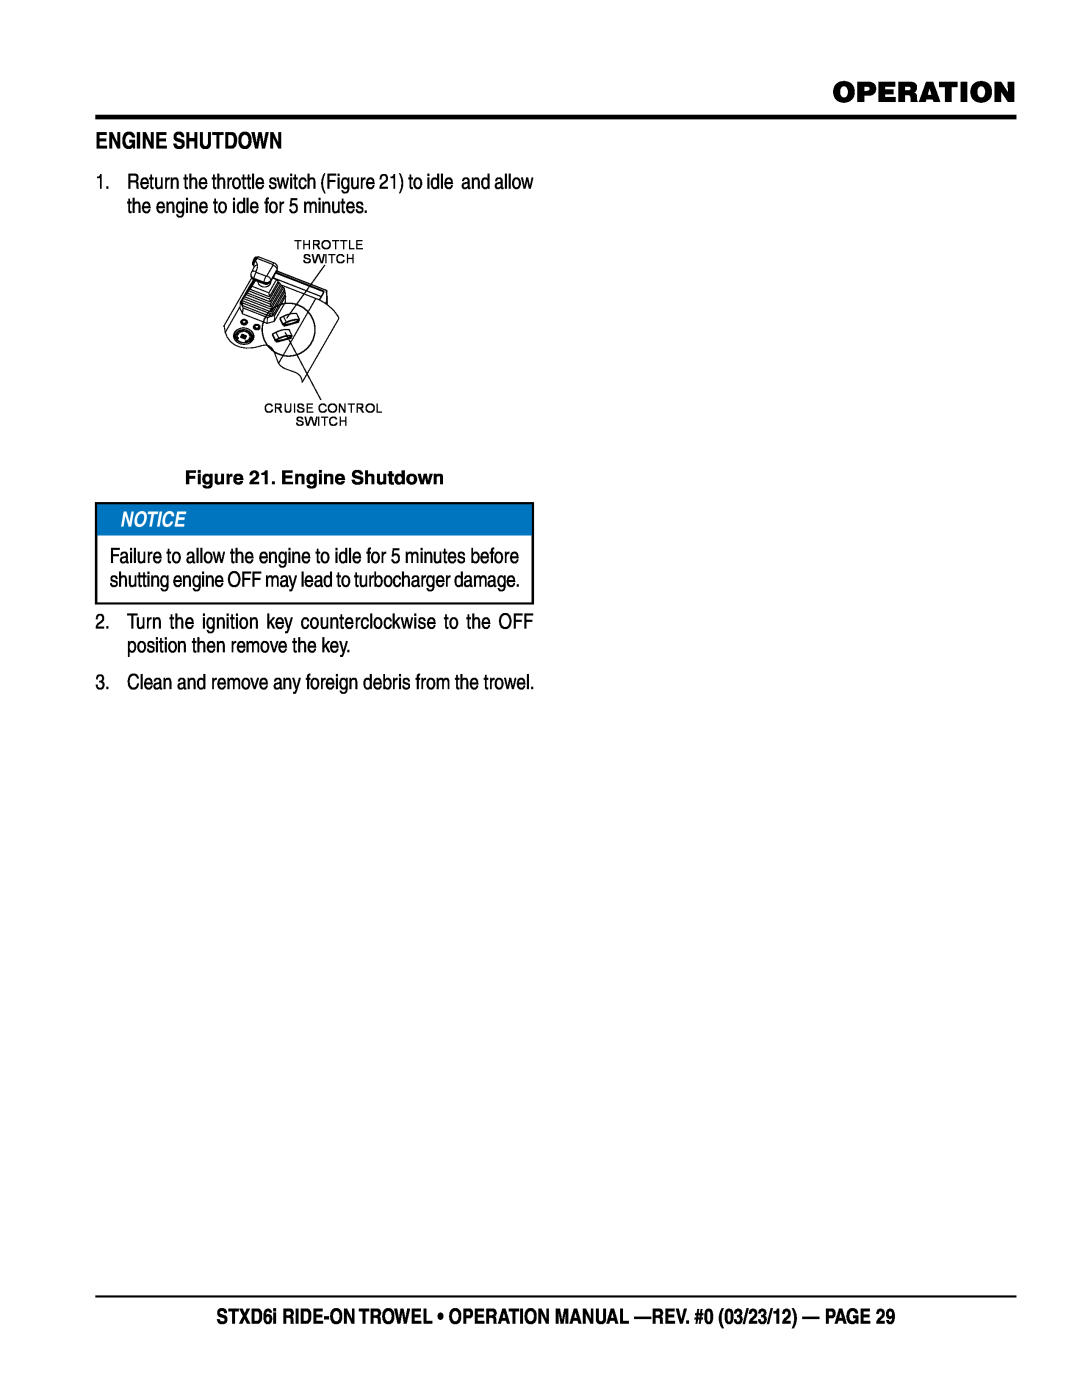 Multiquip Engine ShutDown, STXD6i RIDE-ON TROWEL operation manual -rev. #0 03/23/12 - page 